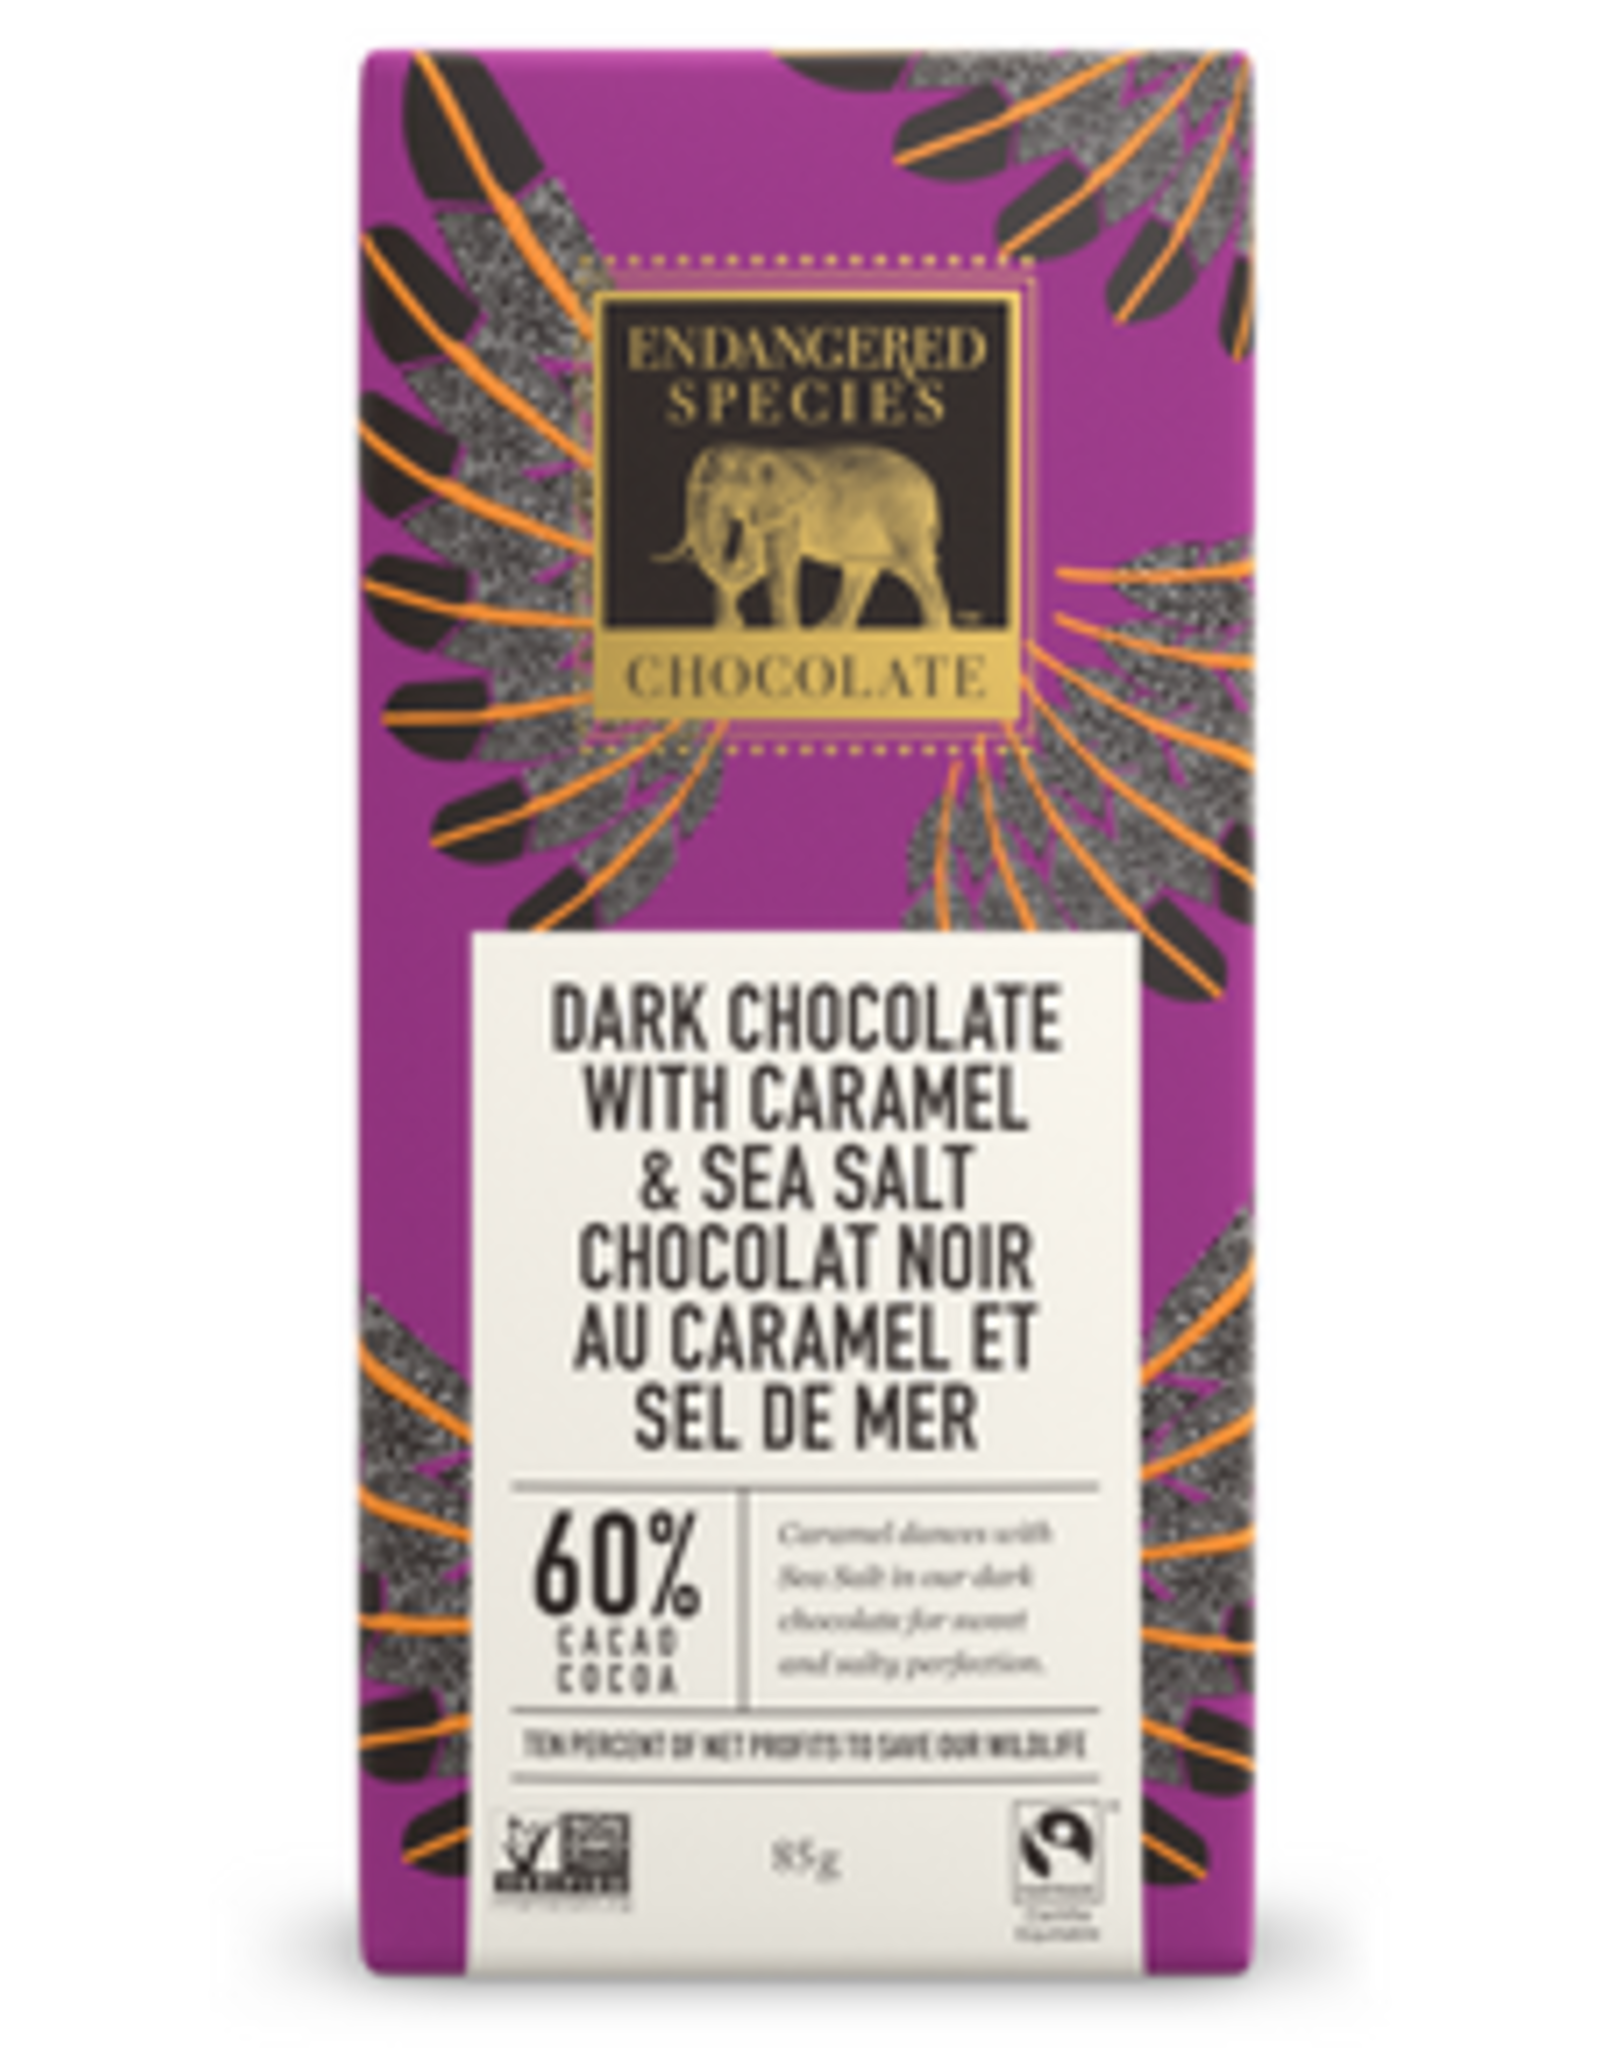 Endangered Species Endangered Species - Tablette de Chocolat Noir, Caramel & Sel de Mer (85g)